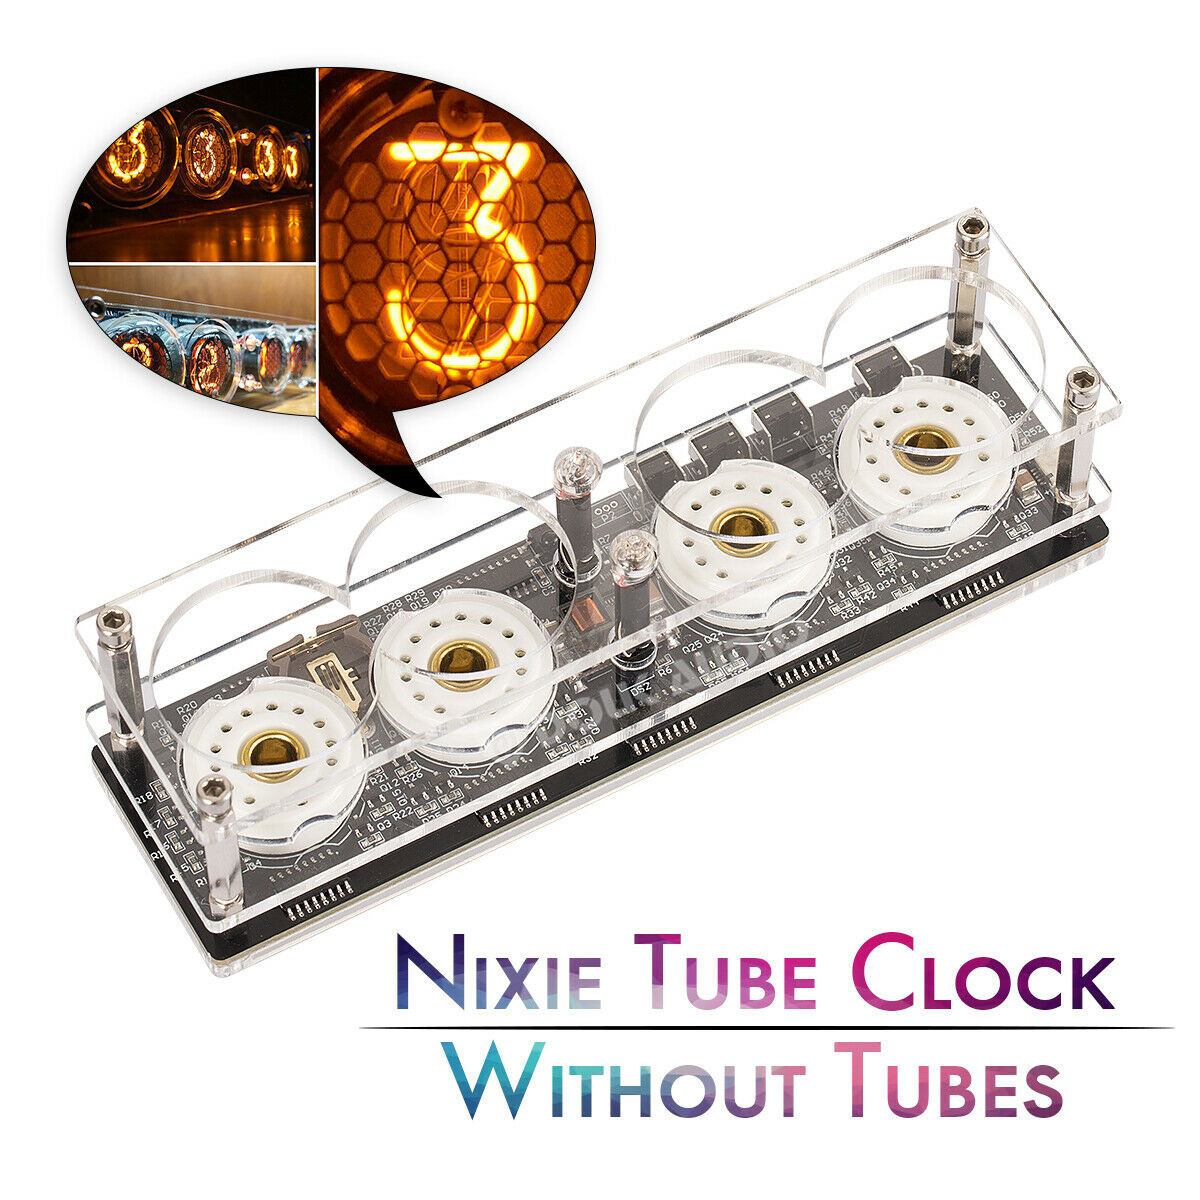 DIY Nixie Tube Clock Kit
 Mini Retro Digital Nixie Tube Clock DIY KIT Assembled